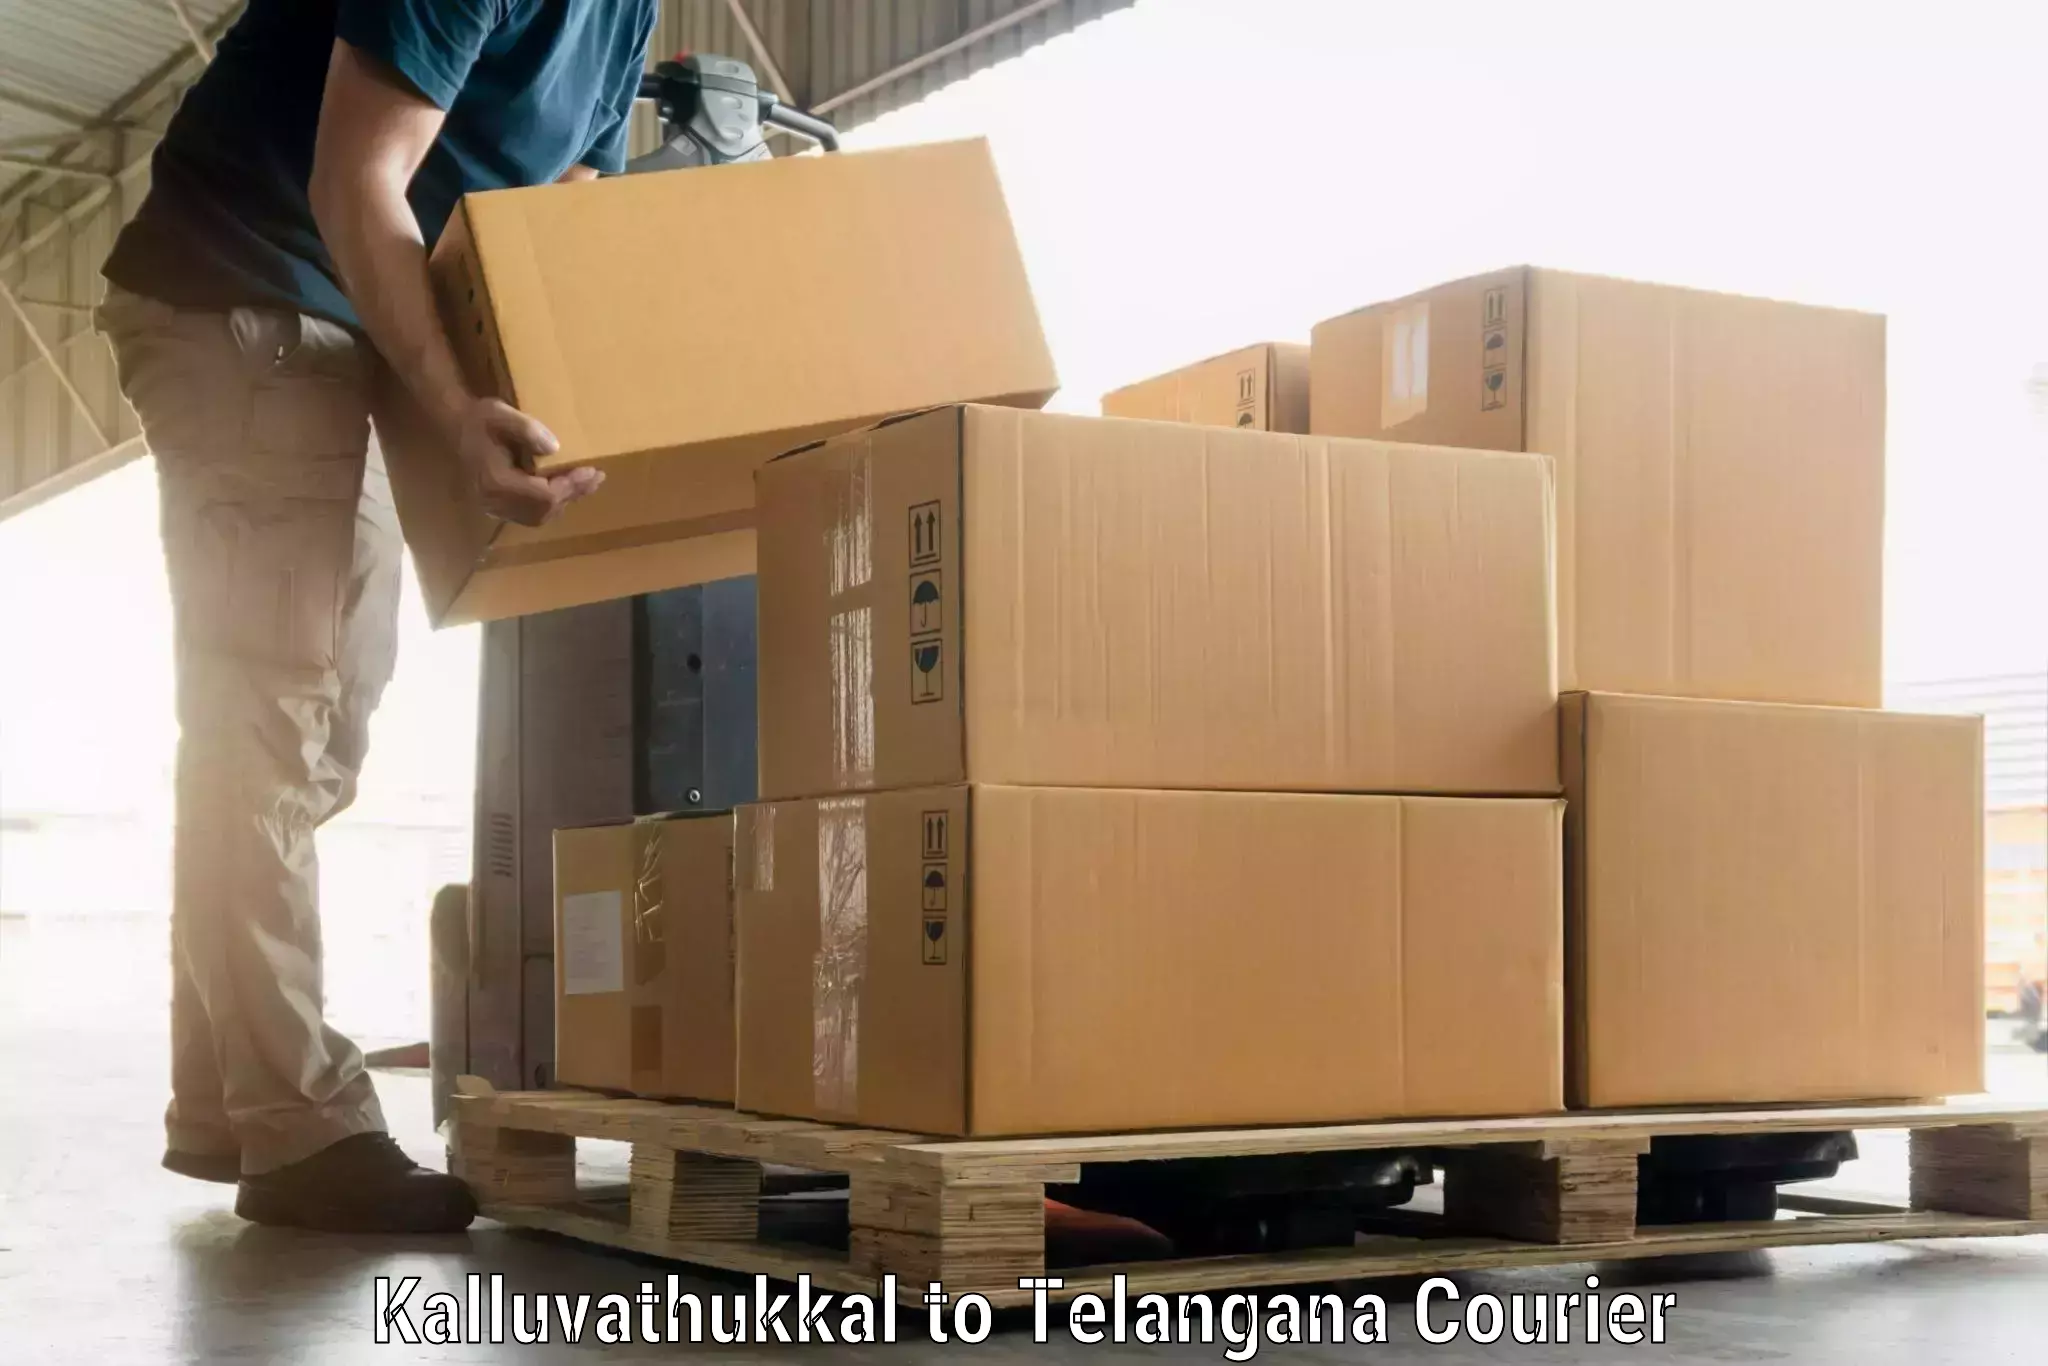 Express luggage delivery in Kalluvathukkal to Adilabad